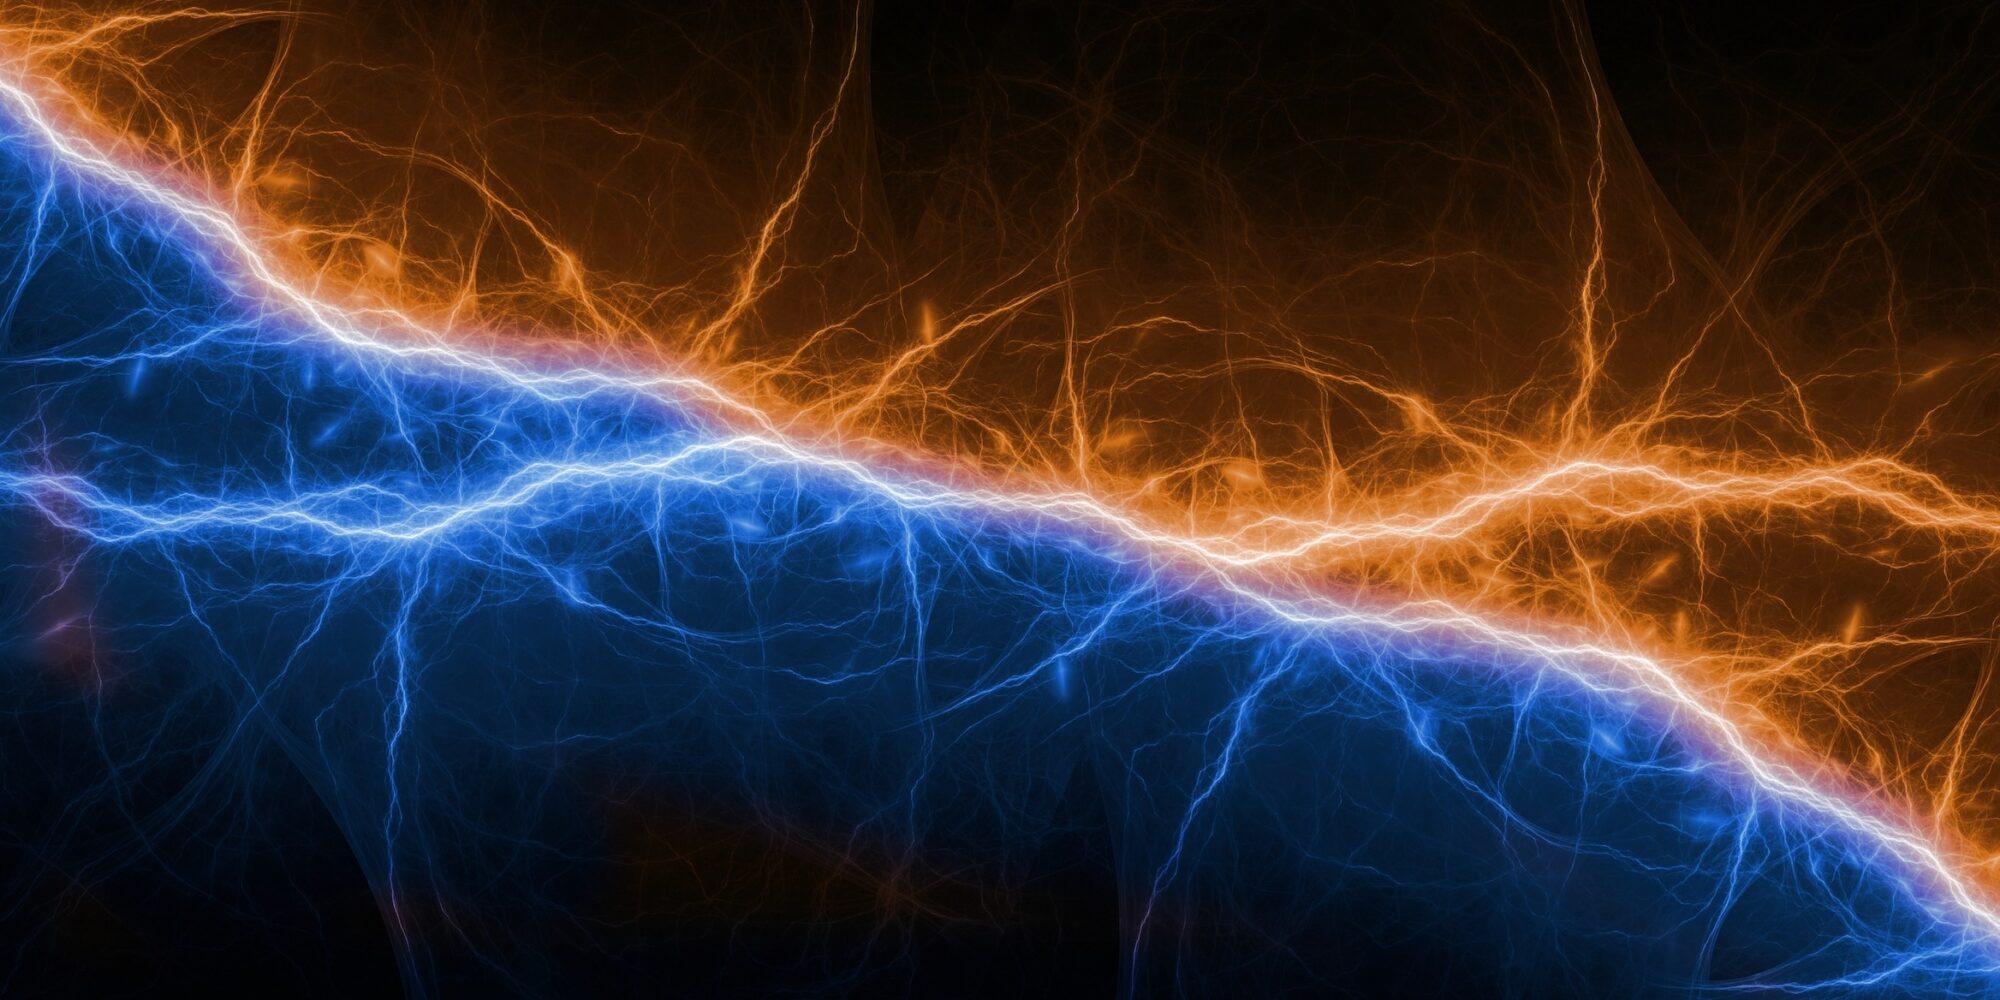 Orange and blue lightning, cold and hot electrical discharge, element danger